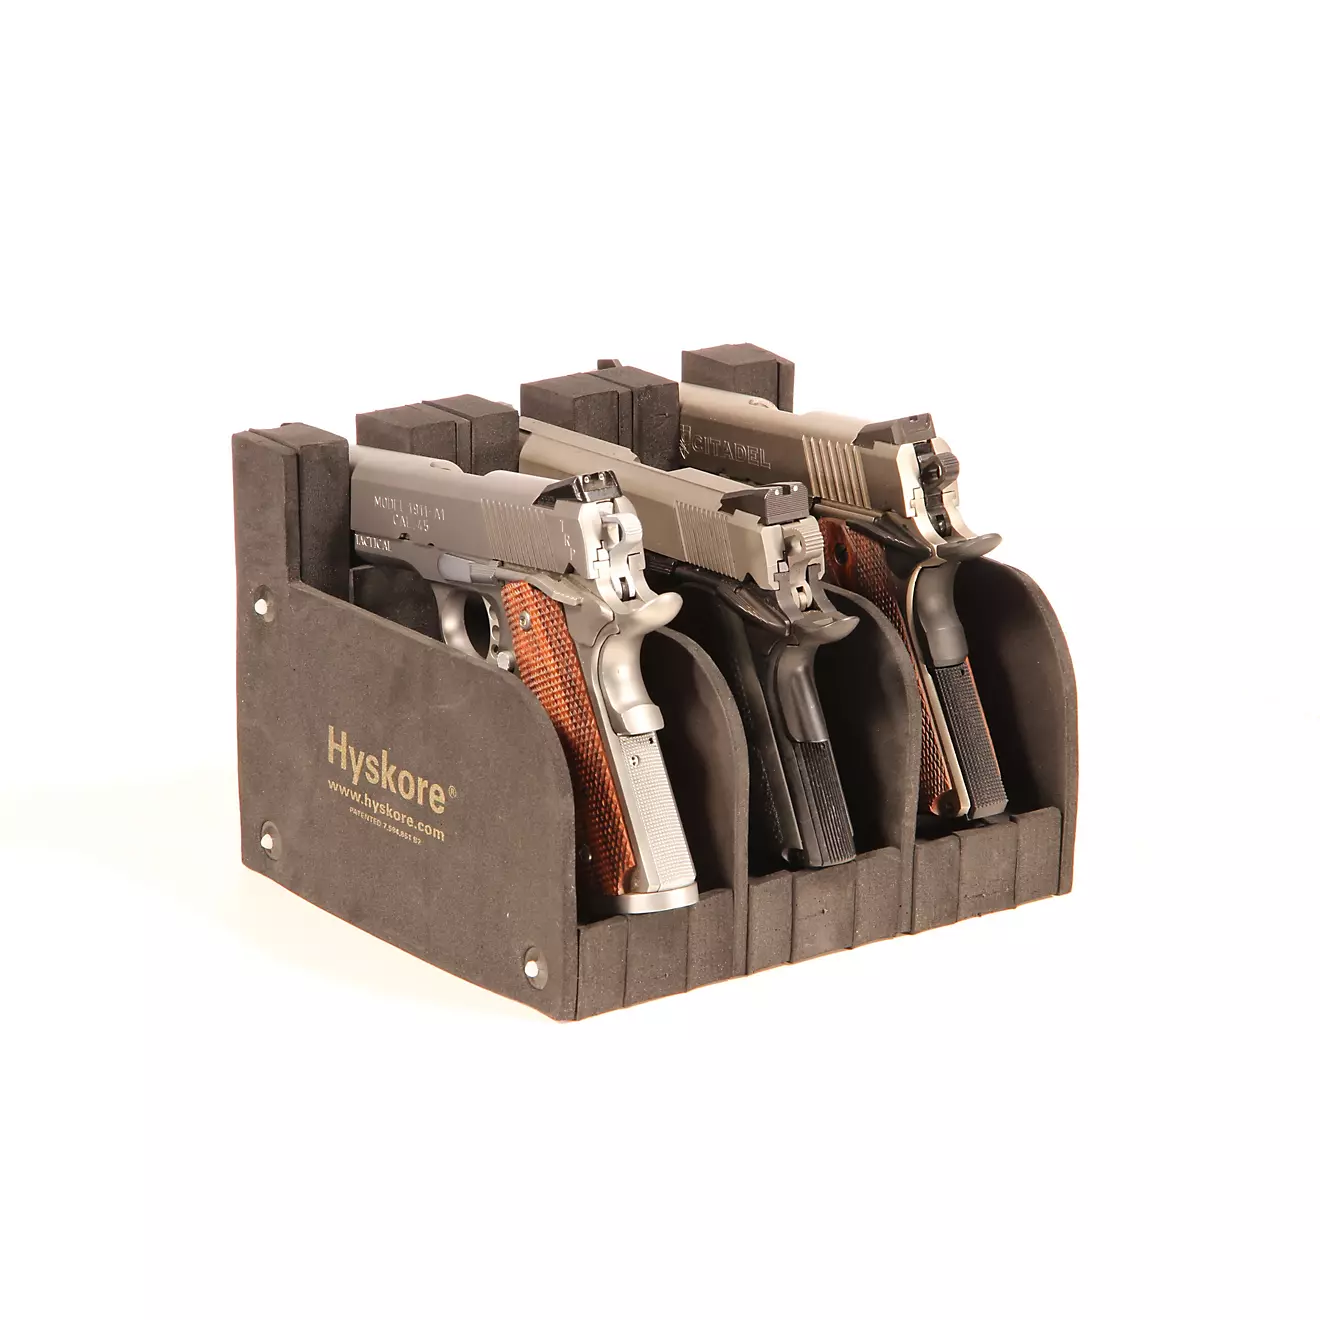 Hyskore® Modular Pistol Rack - 3 slots